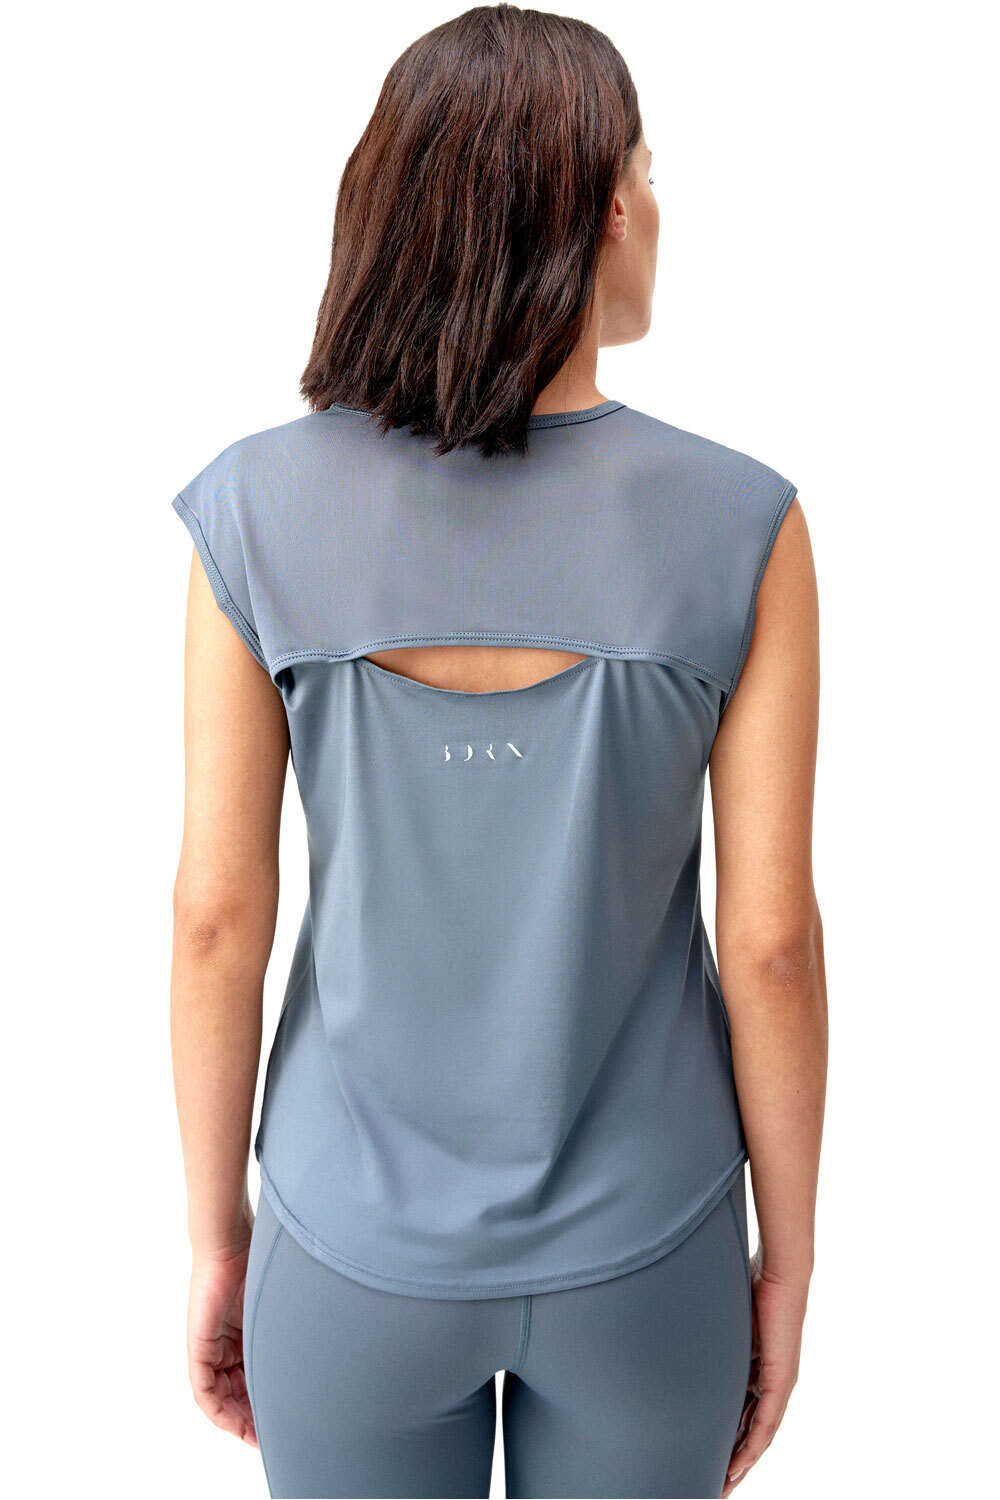 Born Living Yoga camisetas yoga Shirt Sira vista trasera